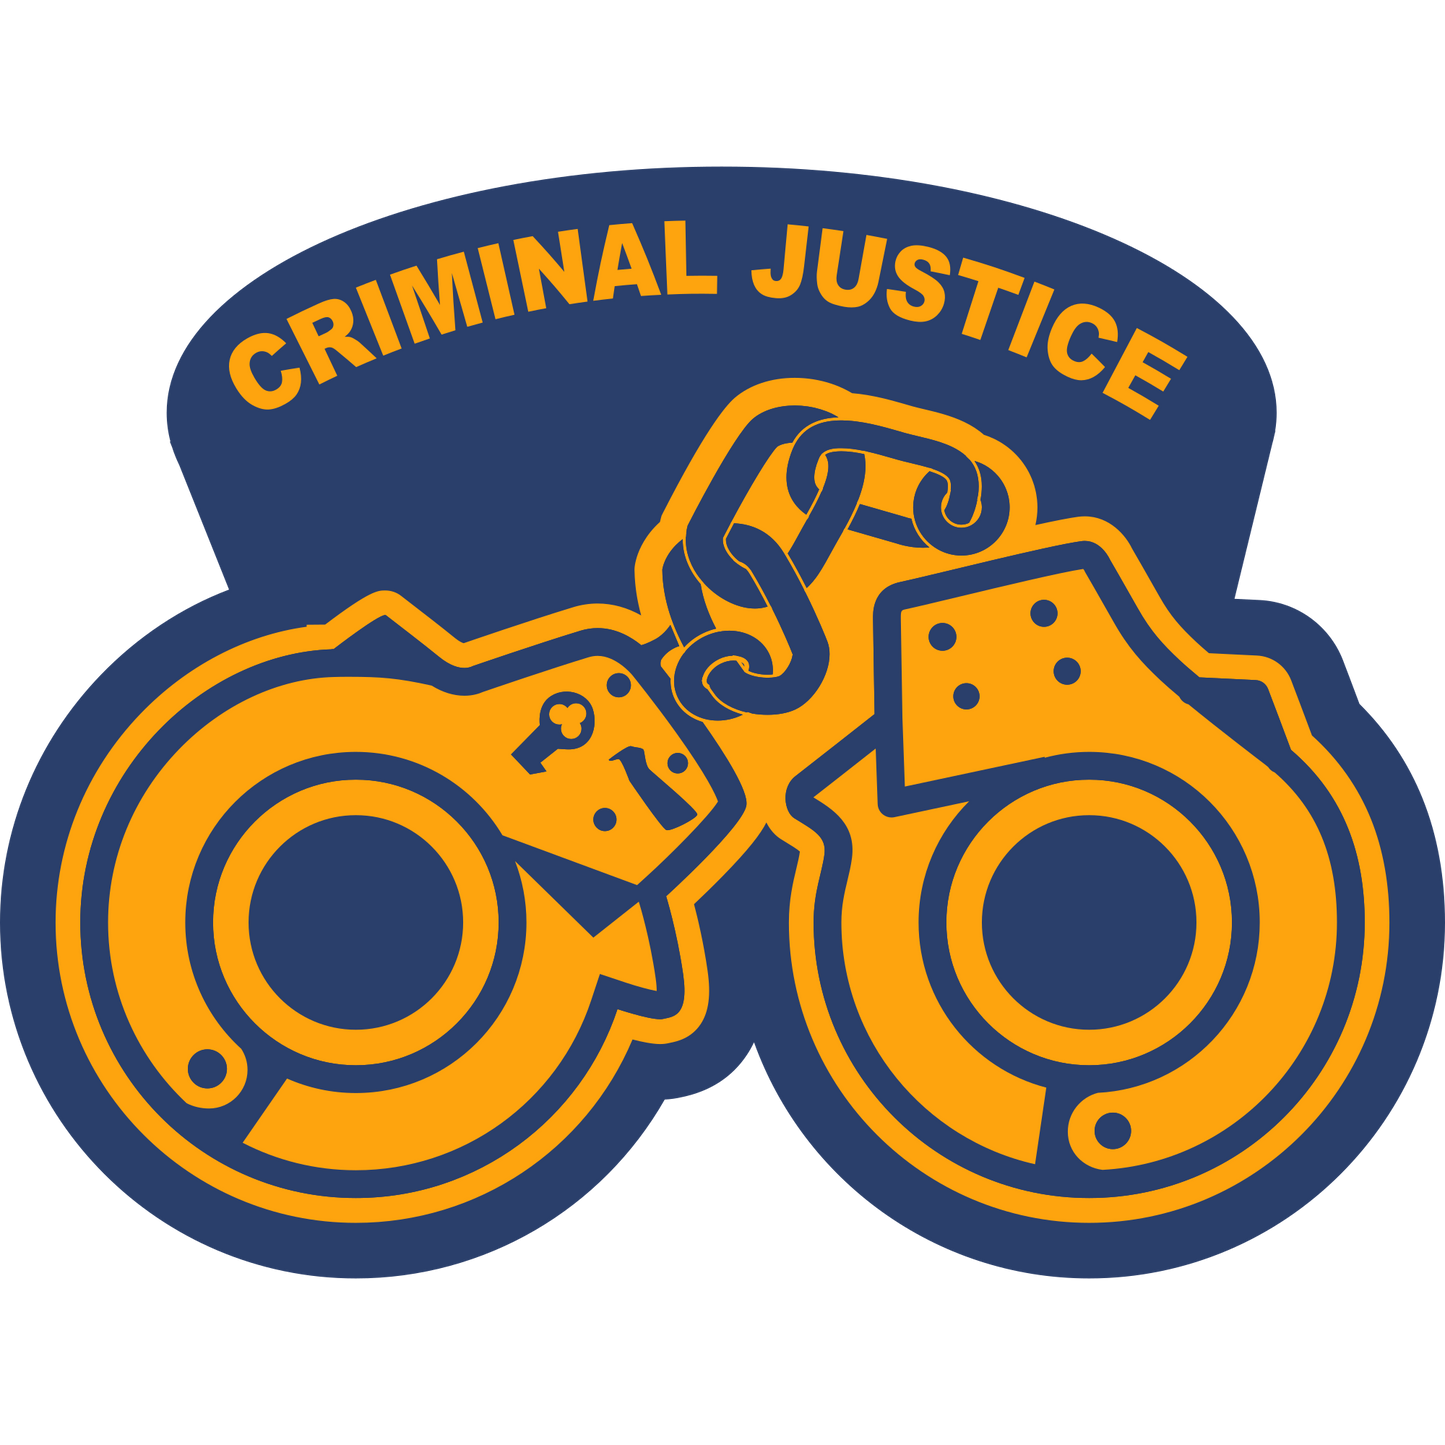 CRJUST - Criminal Justice Sleeve Patch